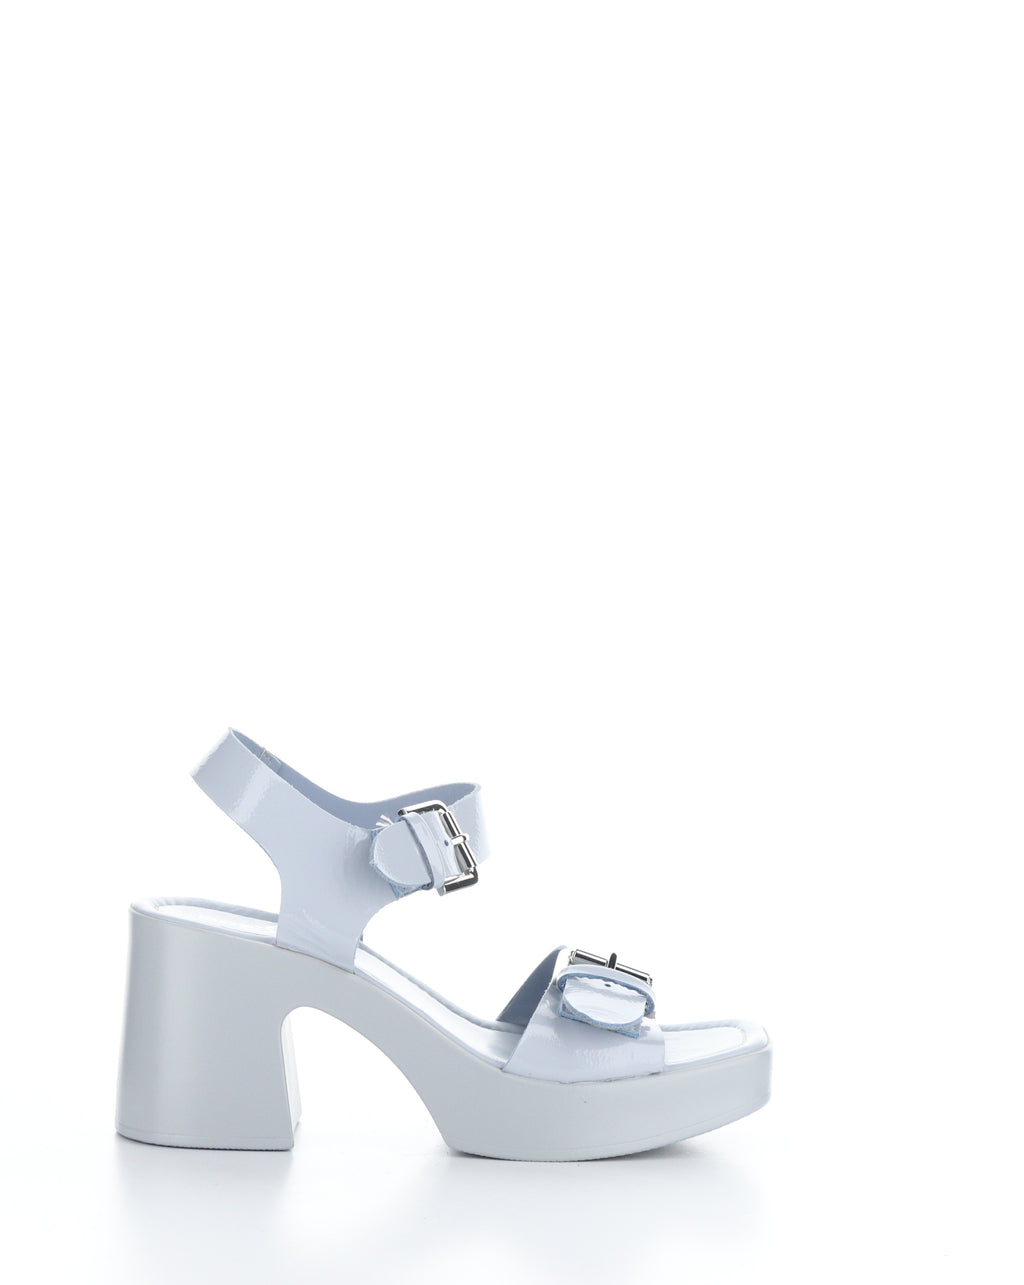 Bos & Co "Vela" Double buckle fashion sandal ice